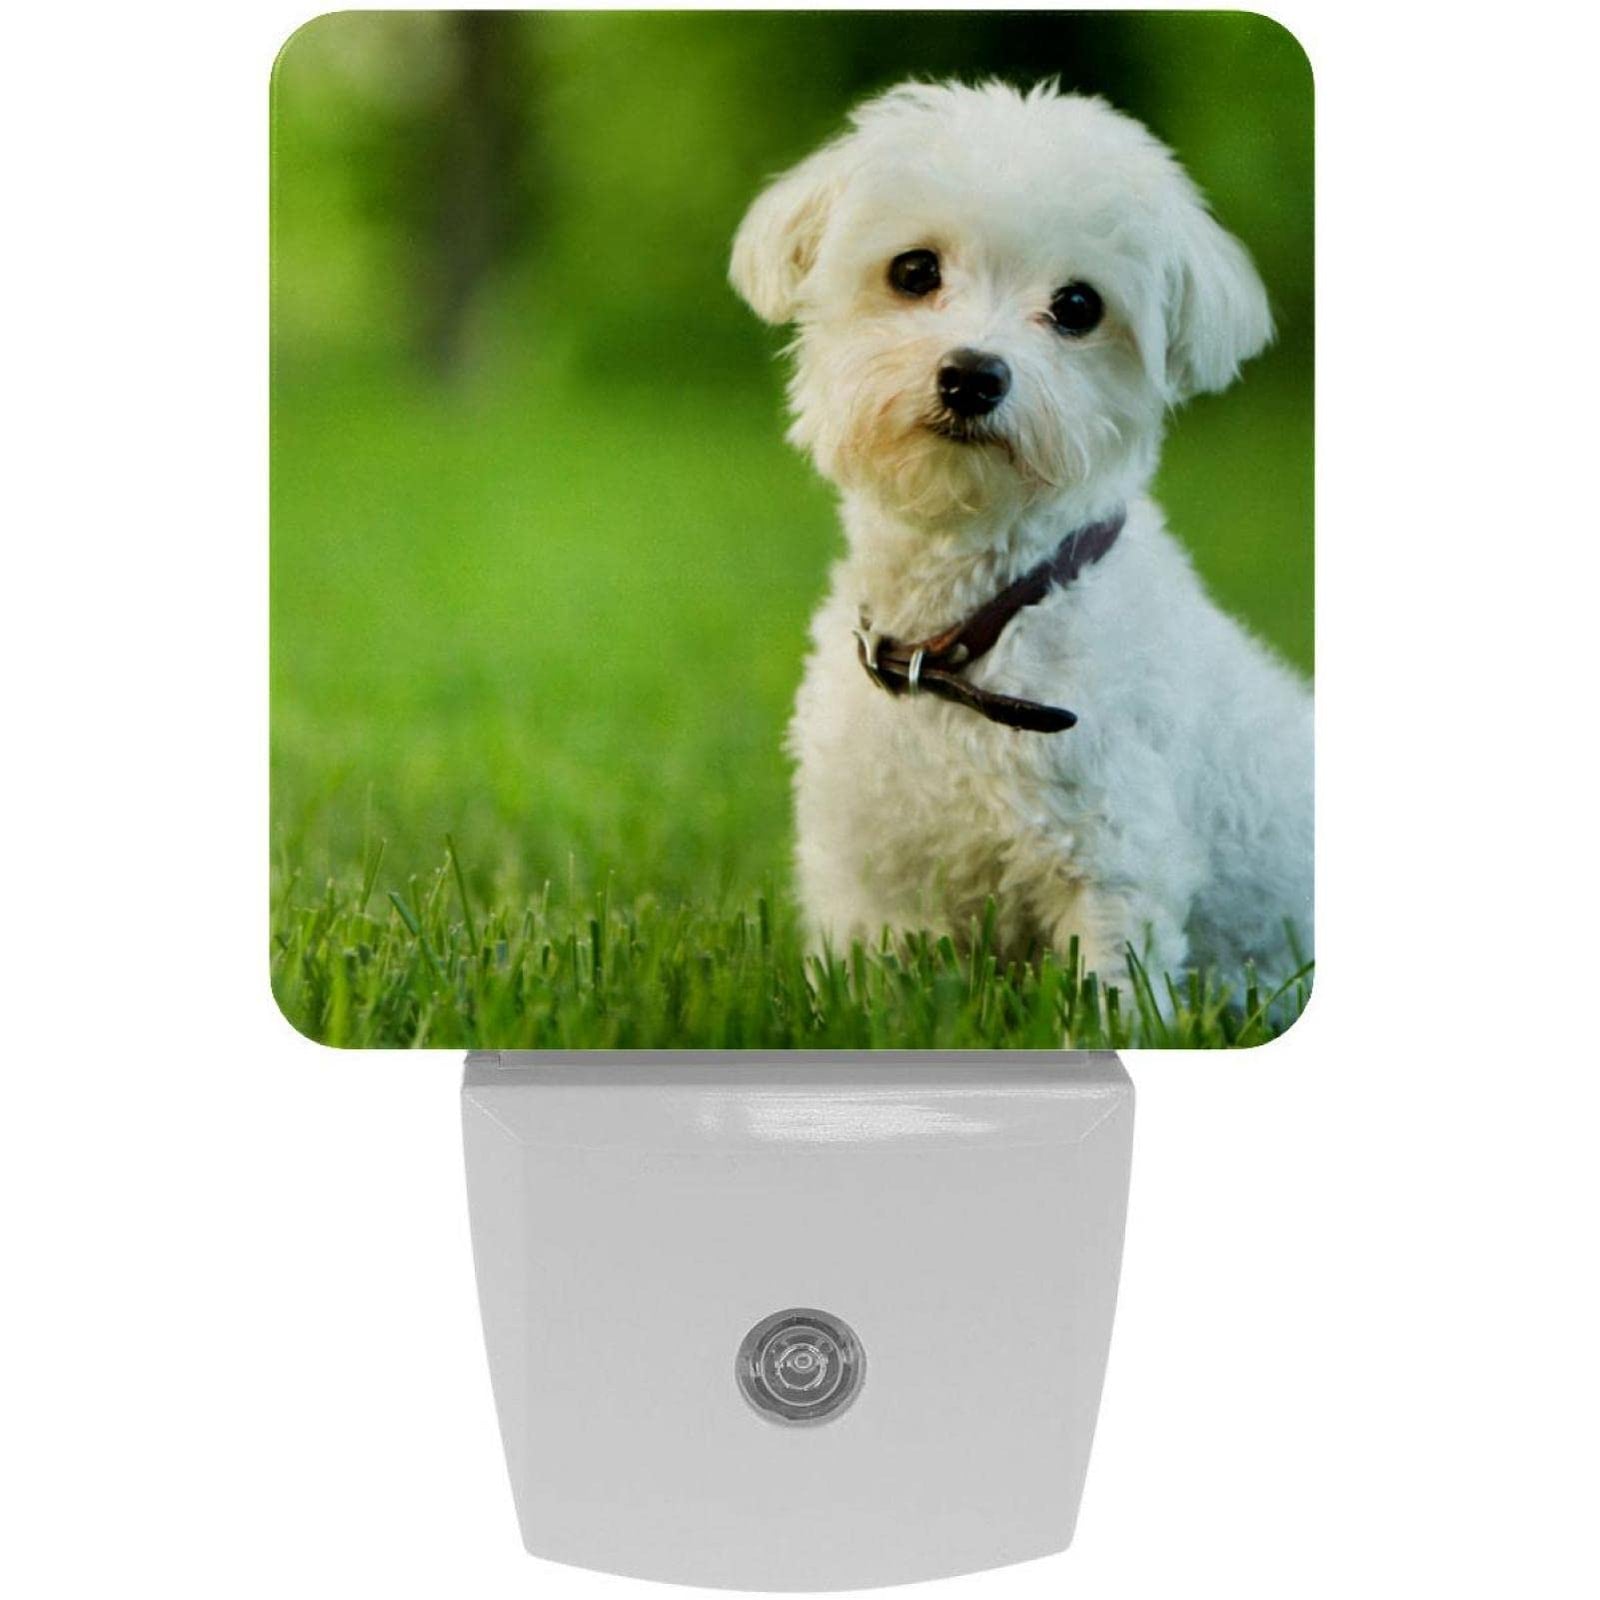 2 Pack Plug-in Nightlight LED Night Light Cute Maltese Dog Sitting in Grass, Dusk-to-Dawn Sensor for Kid's Room Bathroom, Nursery, Kitchen, Hallway